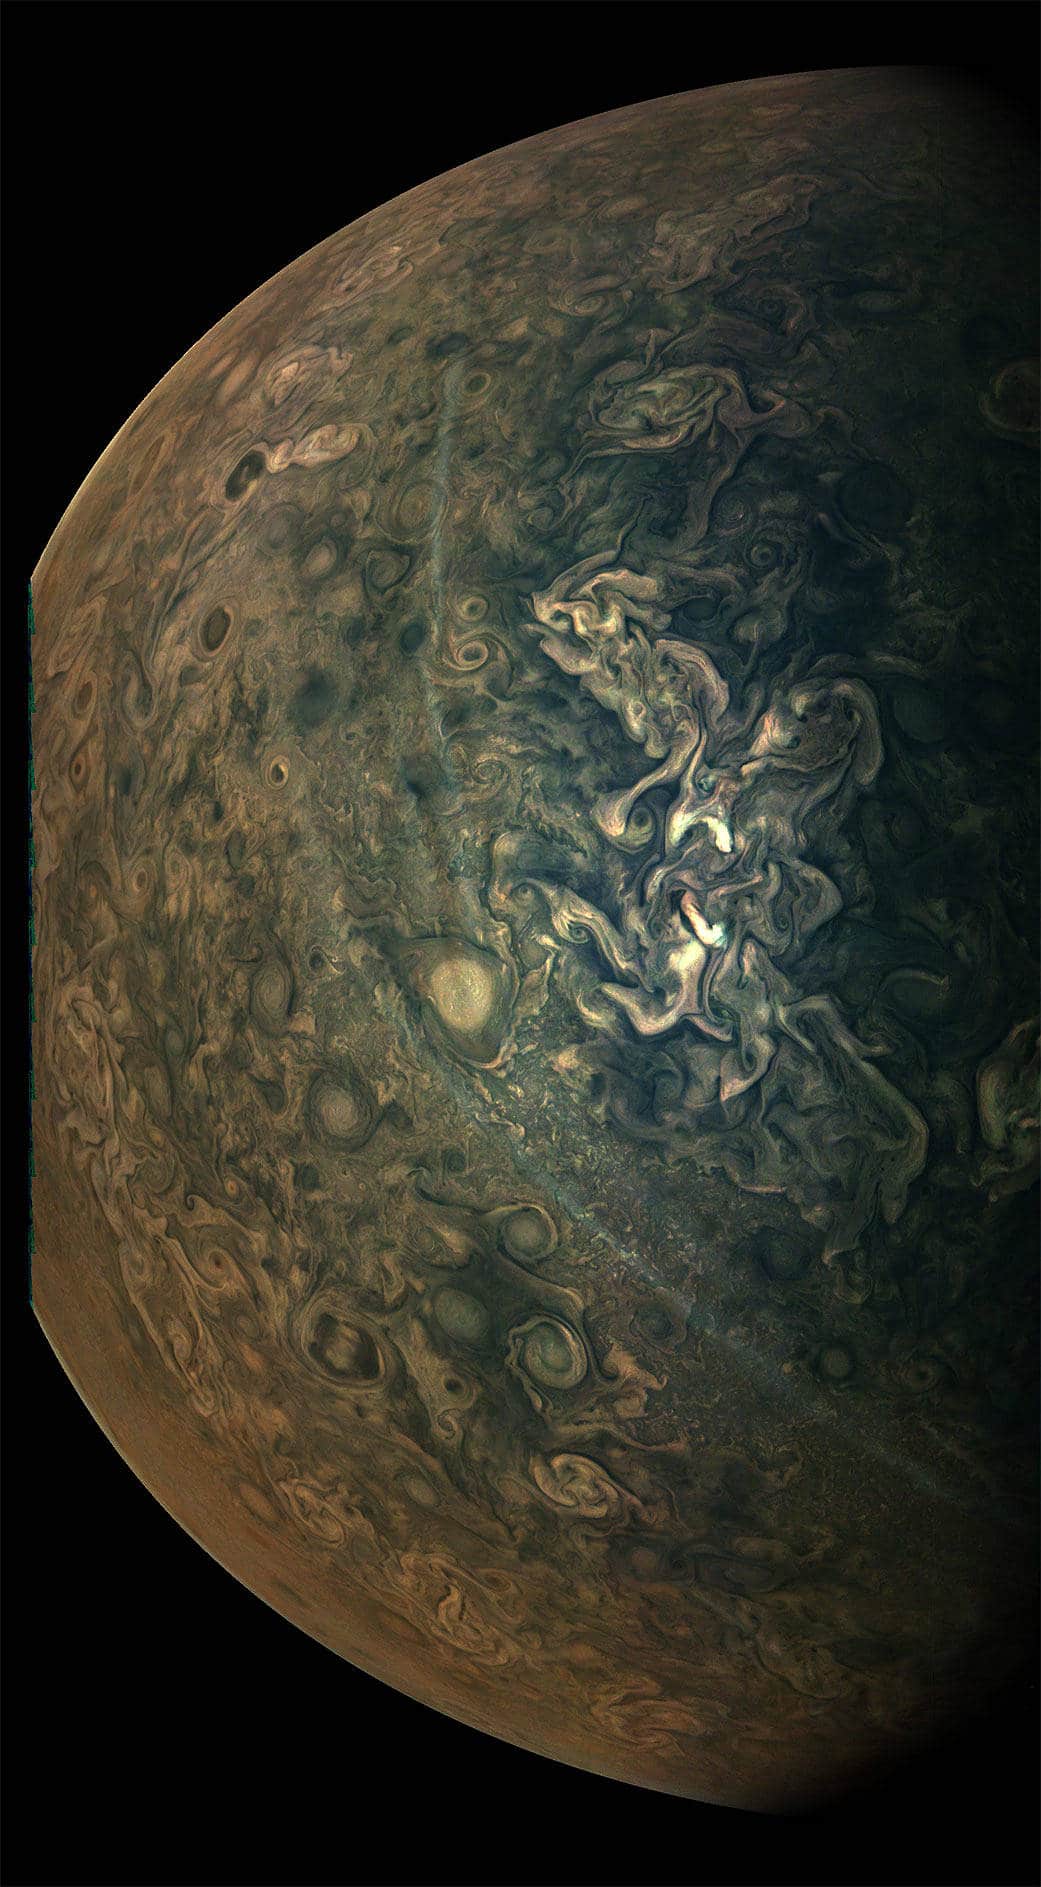 Jupiter Photo by NASA